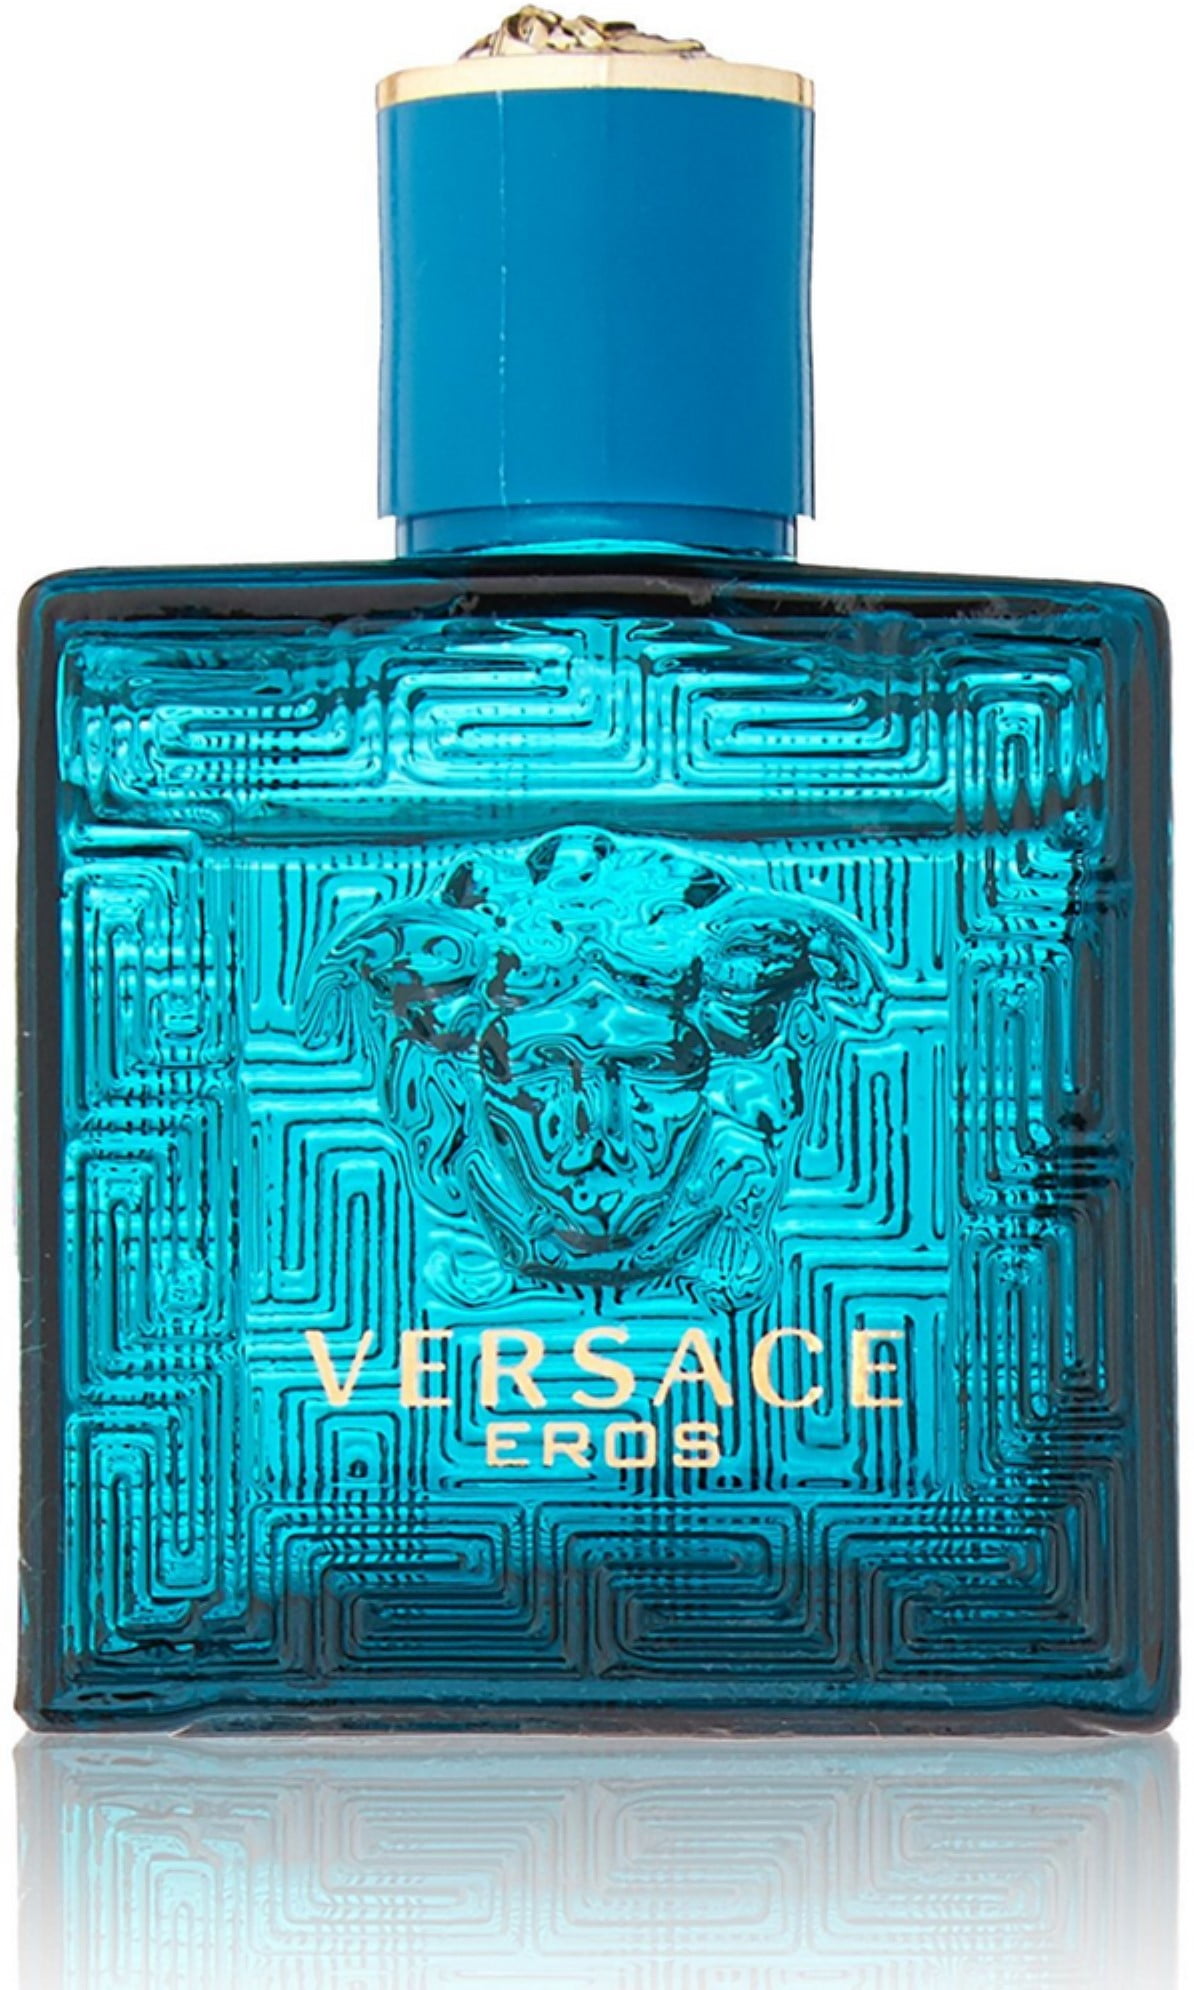 Versace Eros Eau De Toilette Spray 